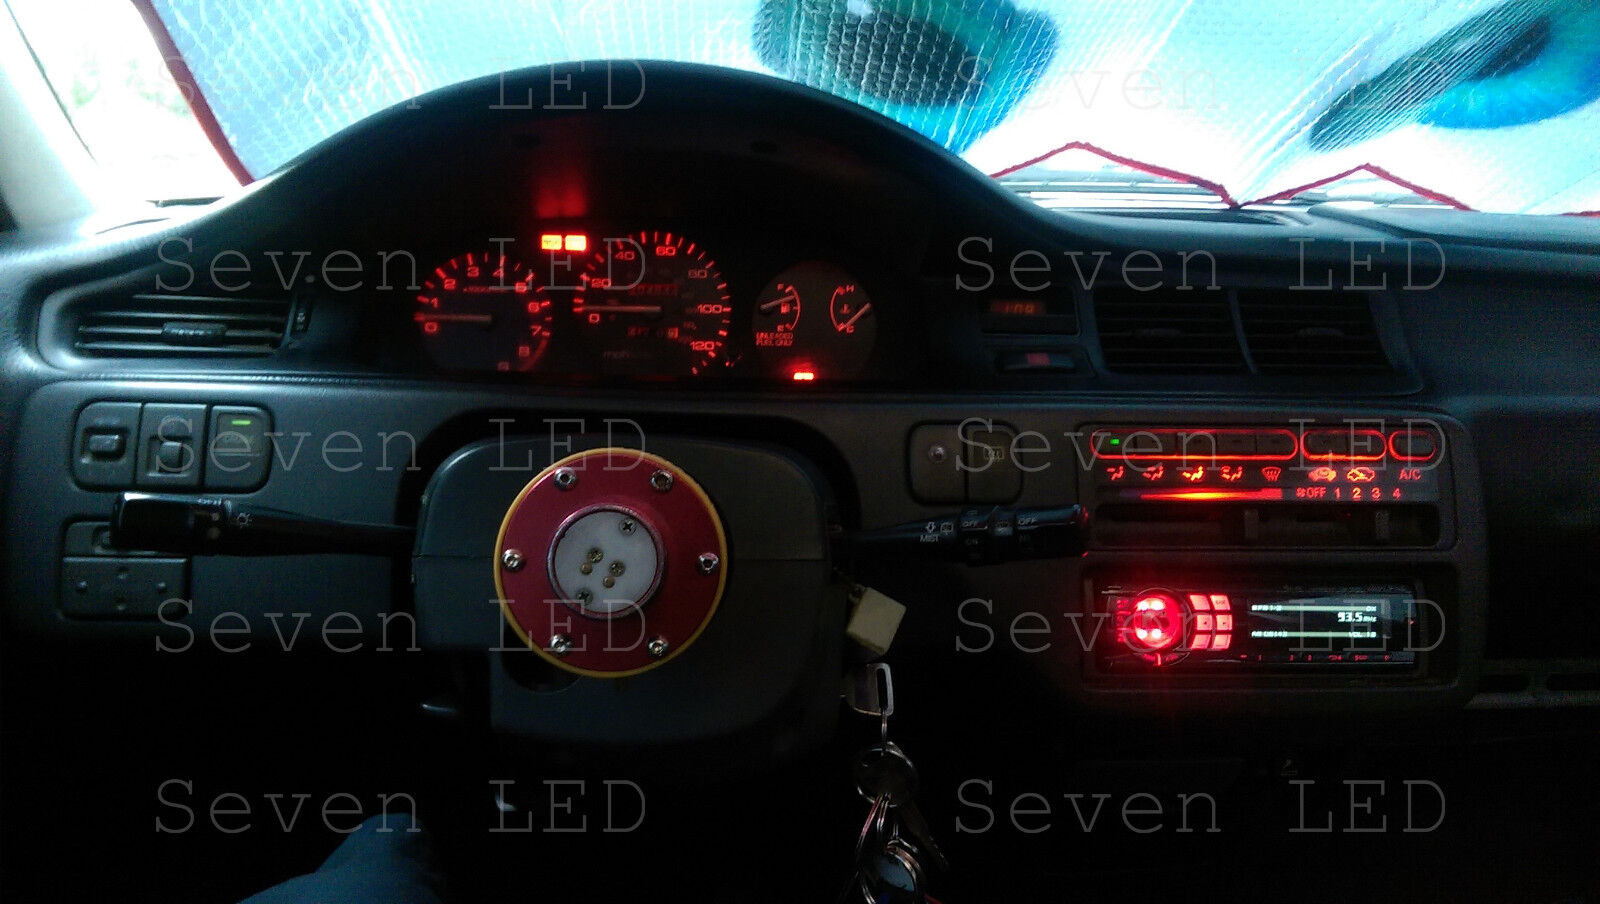 RED LED KIT for Honda Civic EG 92-95 Gauge Cluster + Climate control LED KIT